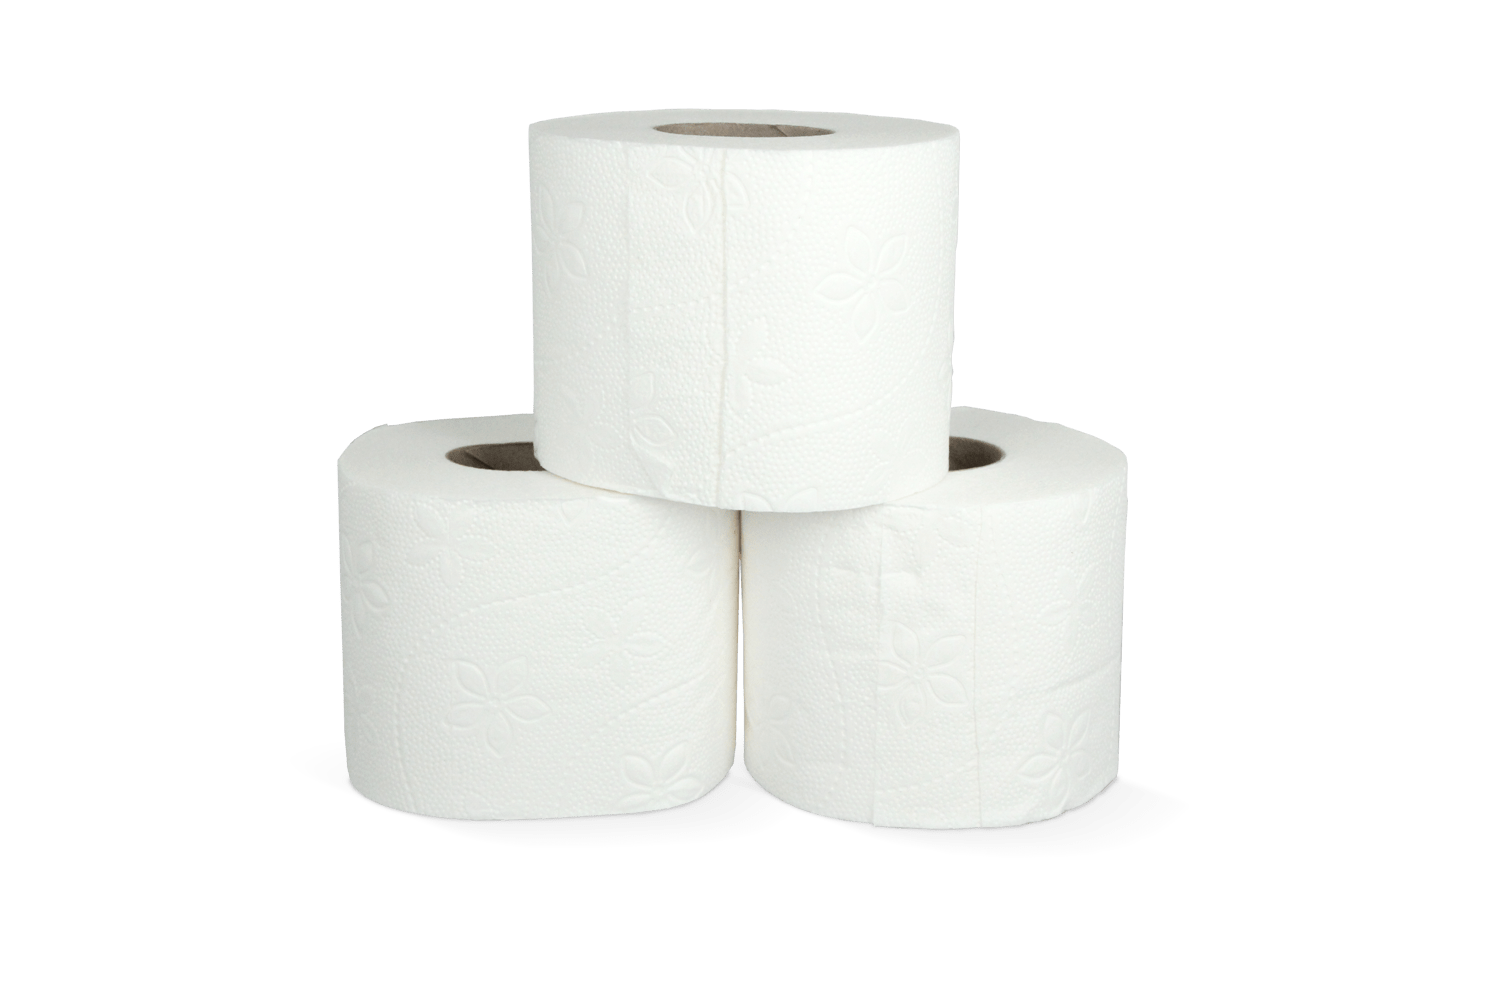 Toiletpapier cellulose 3 laags 250 vel 7x8 rollen